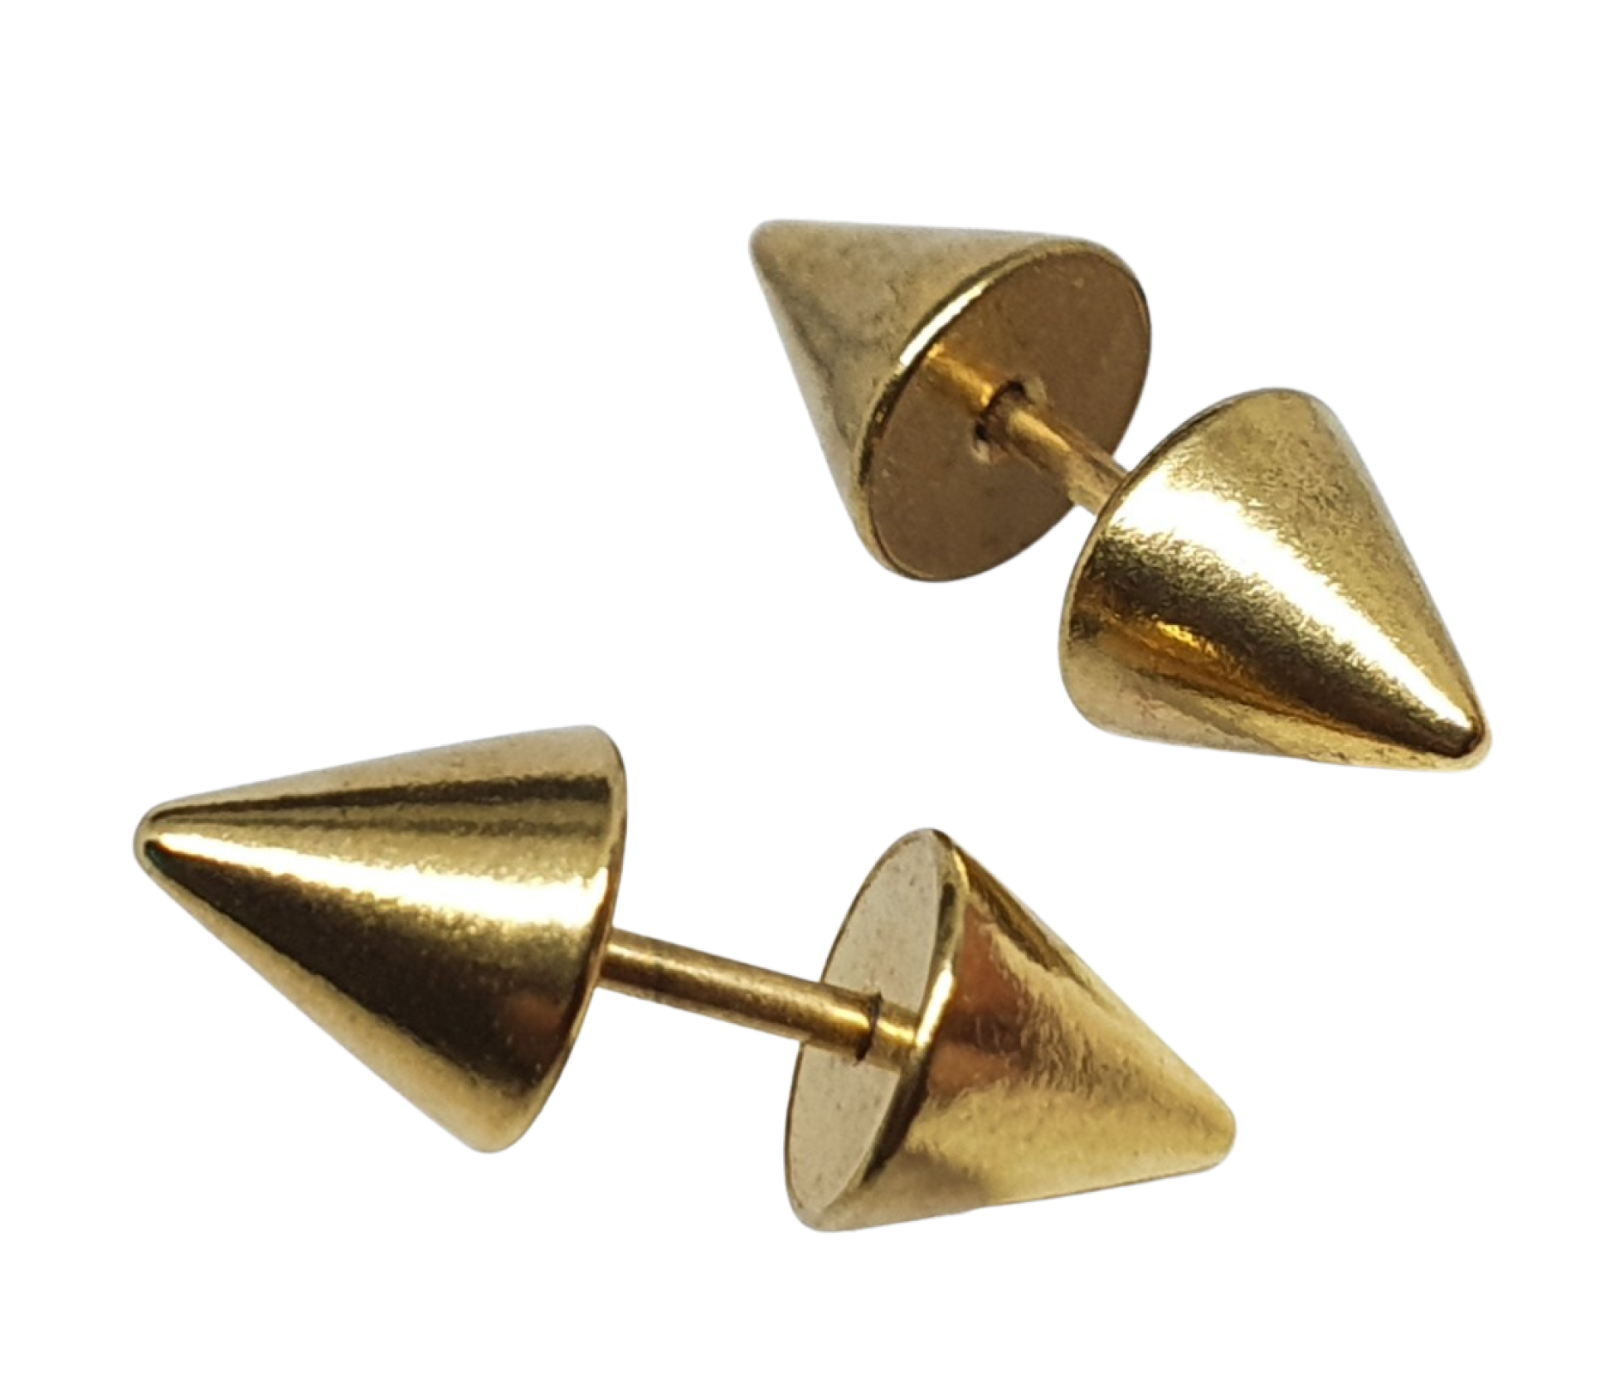 Spike Stud Earrings Gold Cones 16g (1.2mm) Piercings Unique Style Unisex Uk